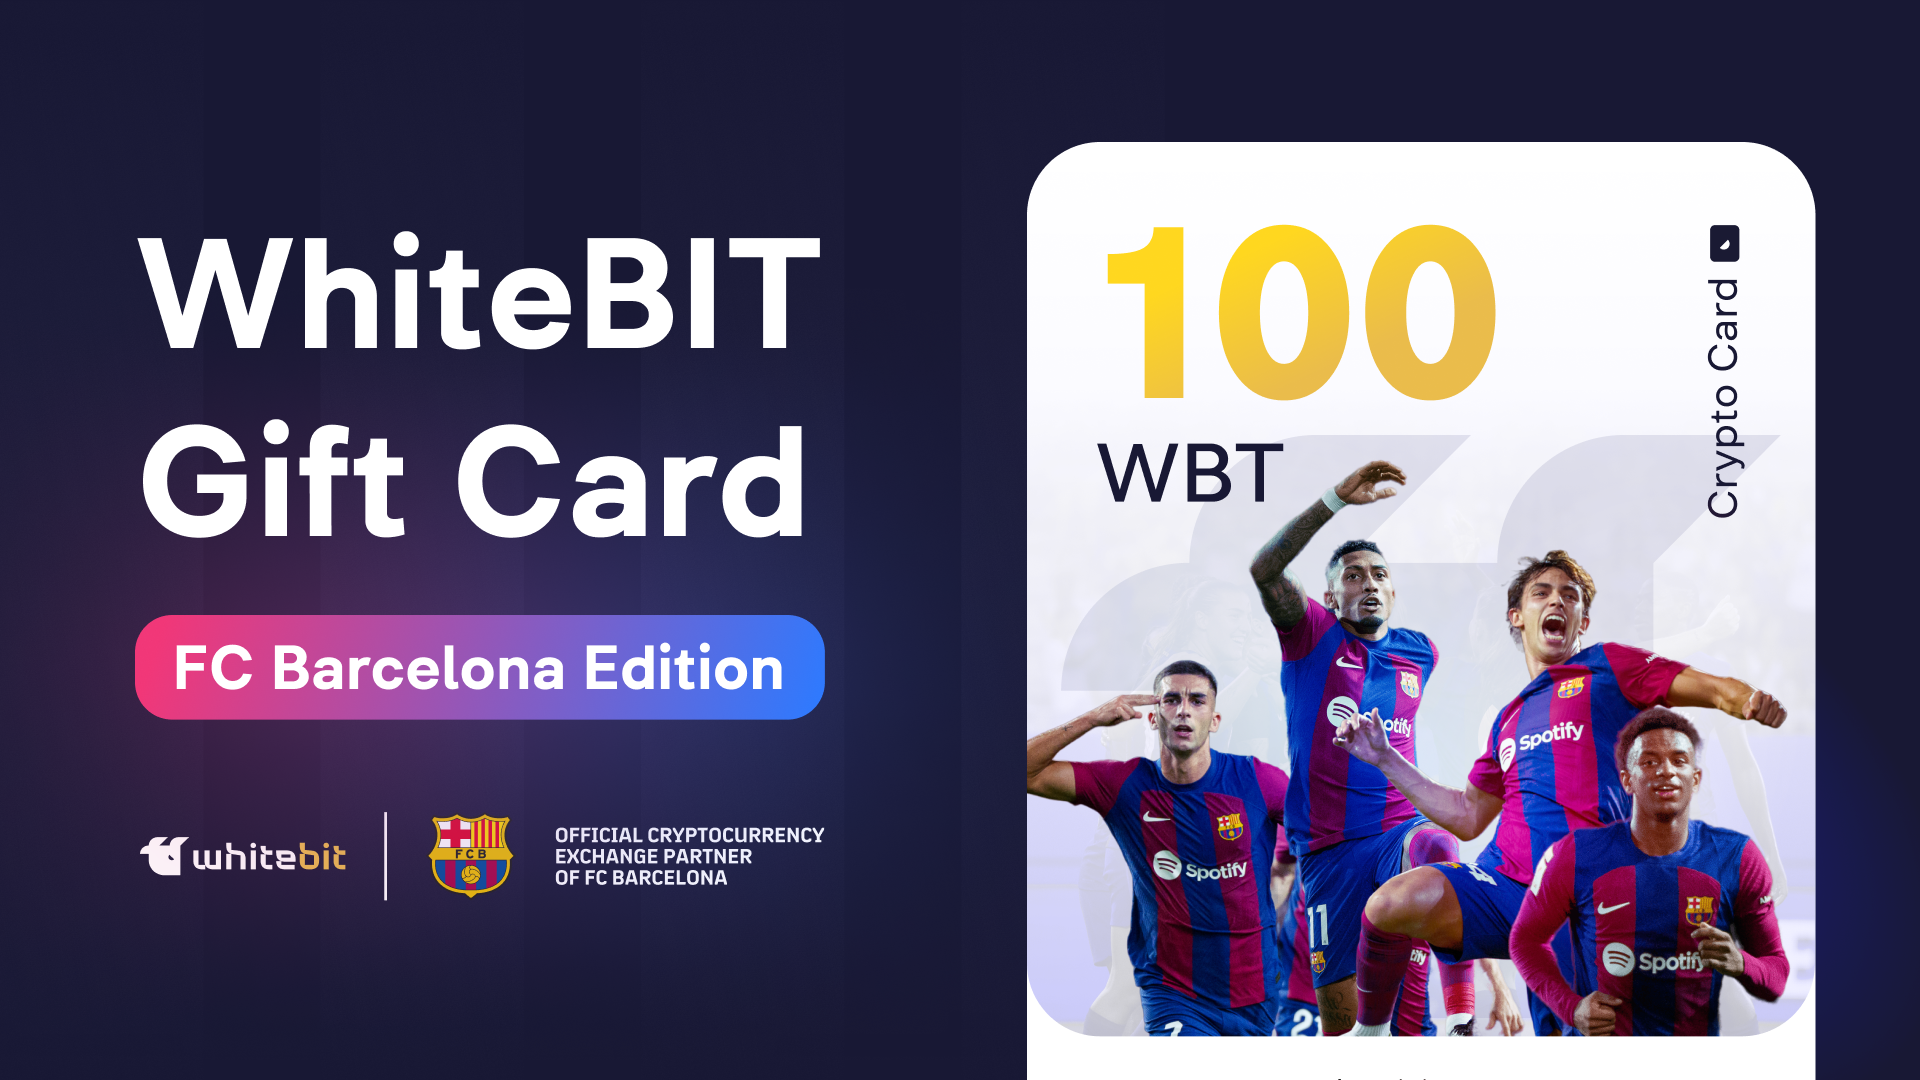 WhiteBIT - FC Barcelona Edition - 100 WBT Gift Card 915.44$